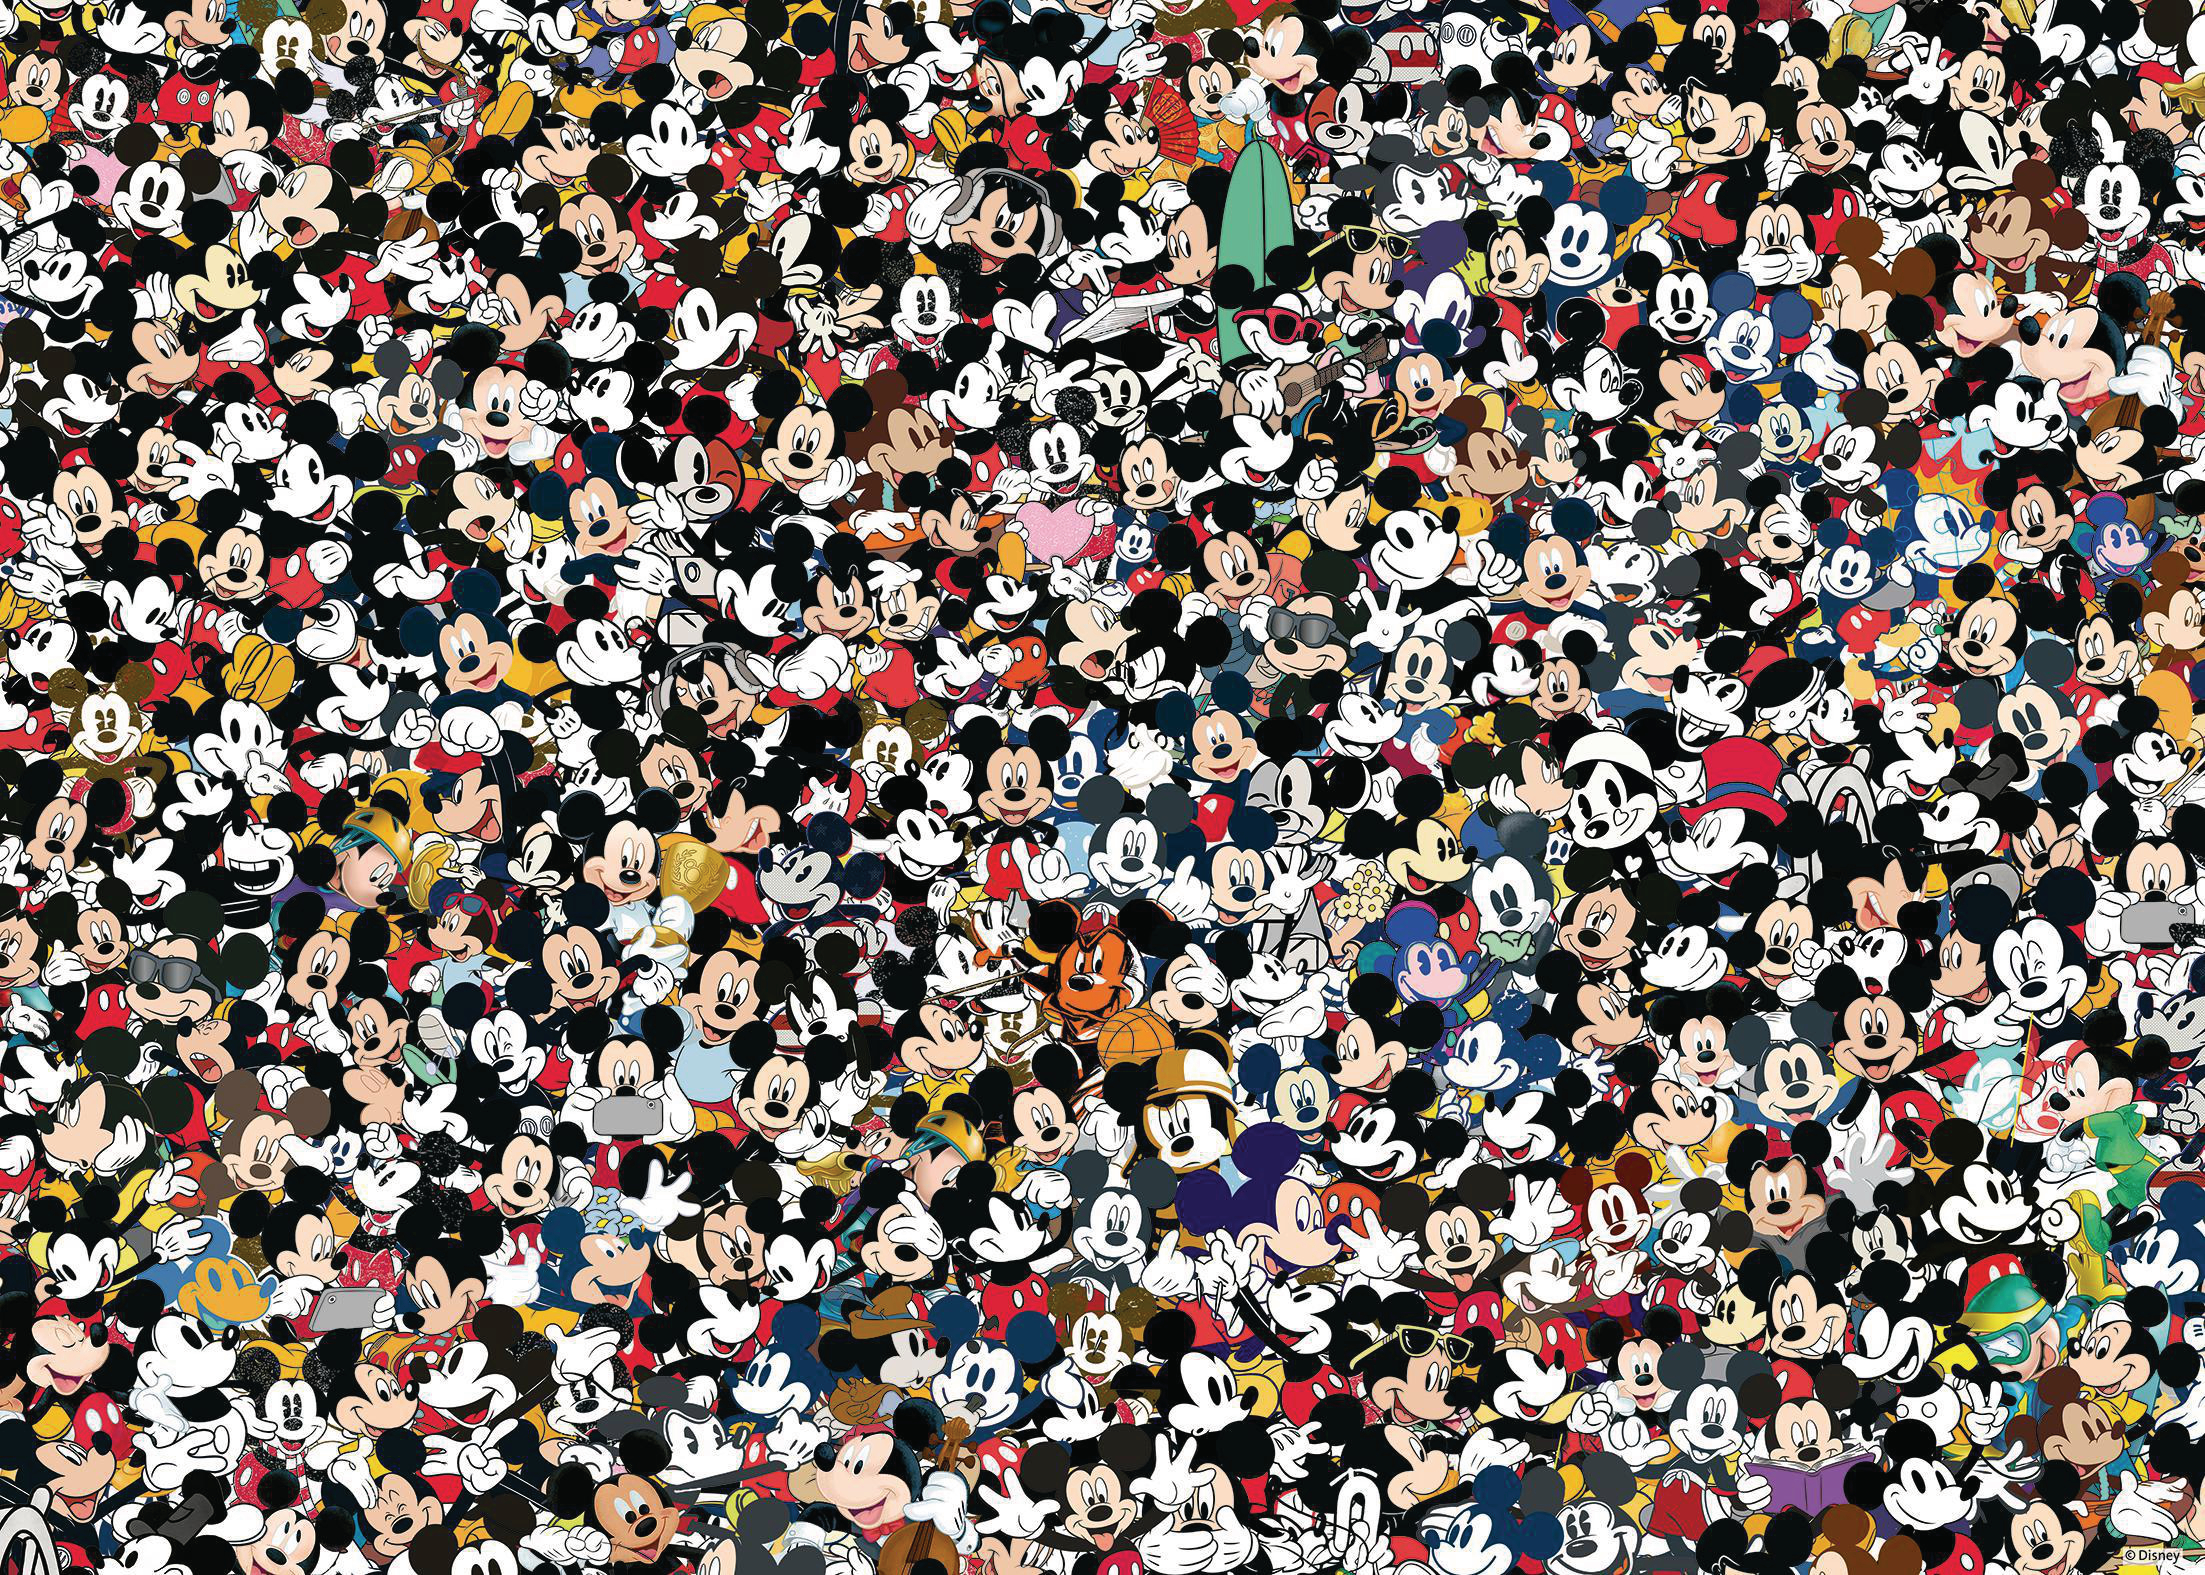 RAVENSBURGER Challenge Mickey Mehrfarbig Puzzle